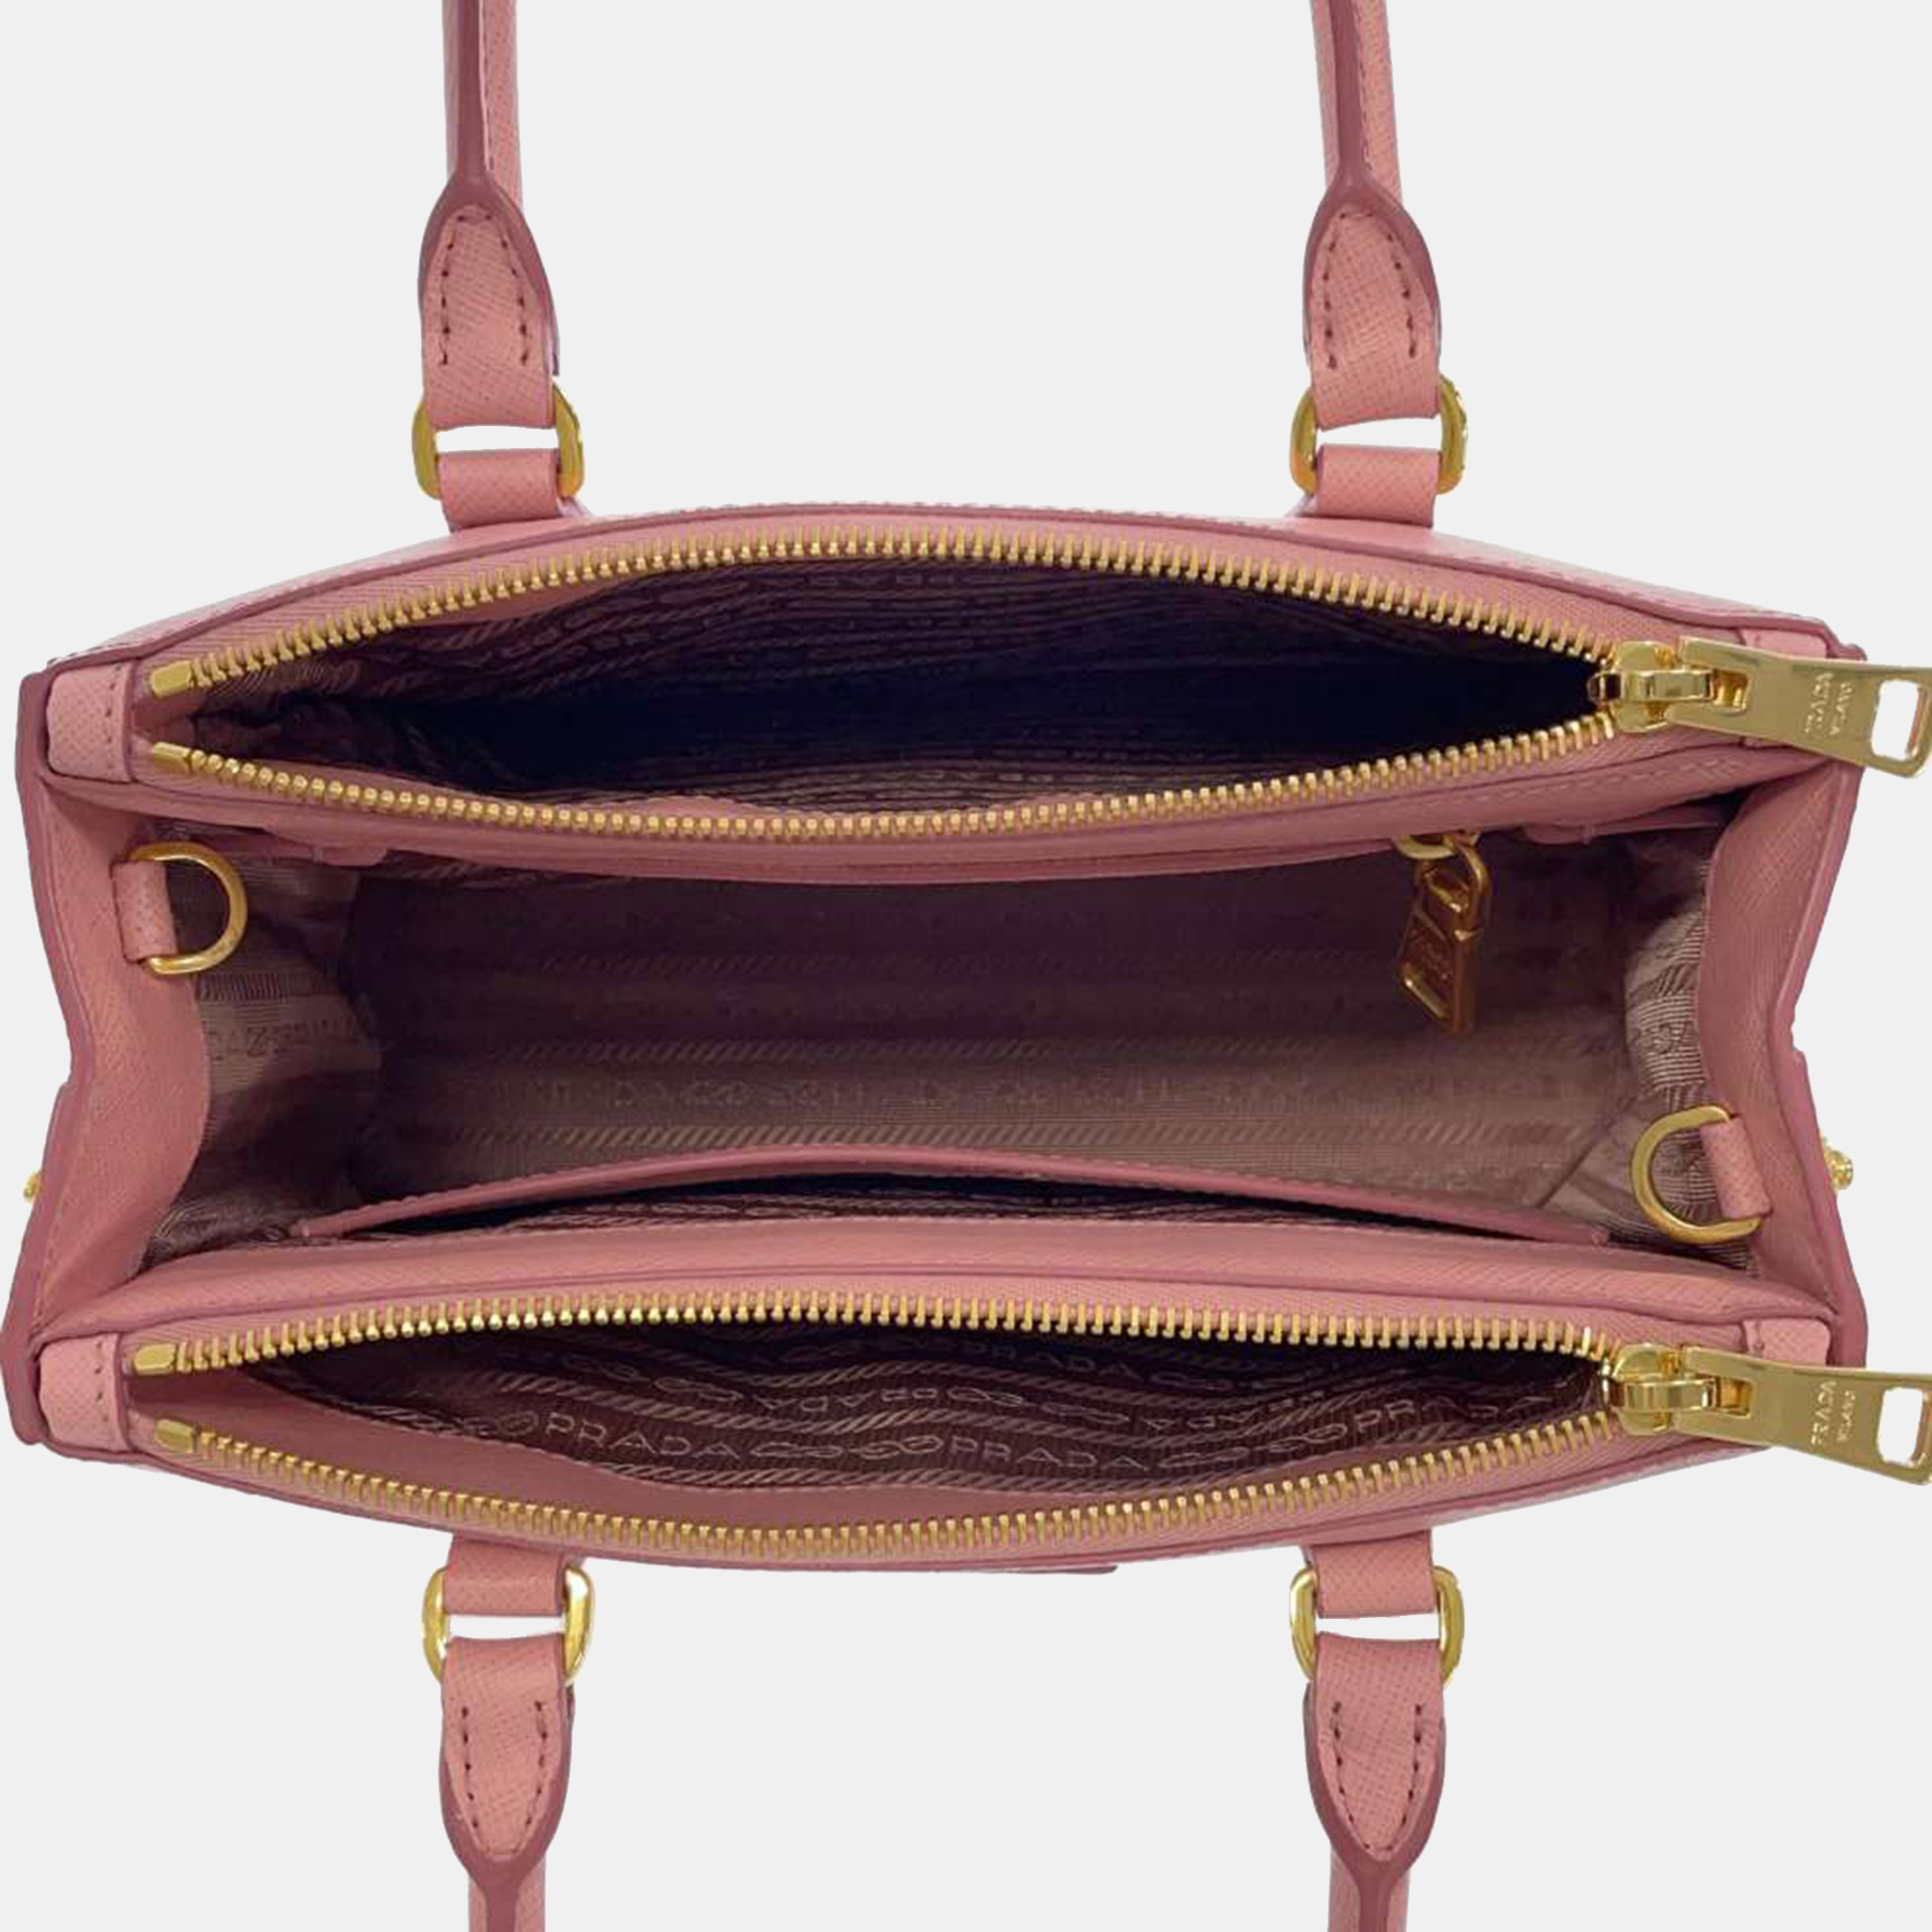 Prada Pink Leather Saffiano Leather Galleria Handbag